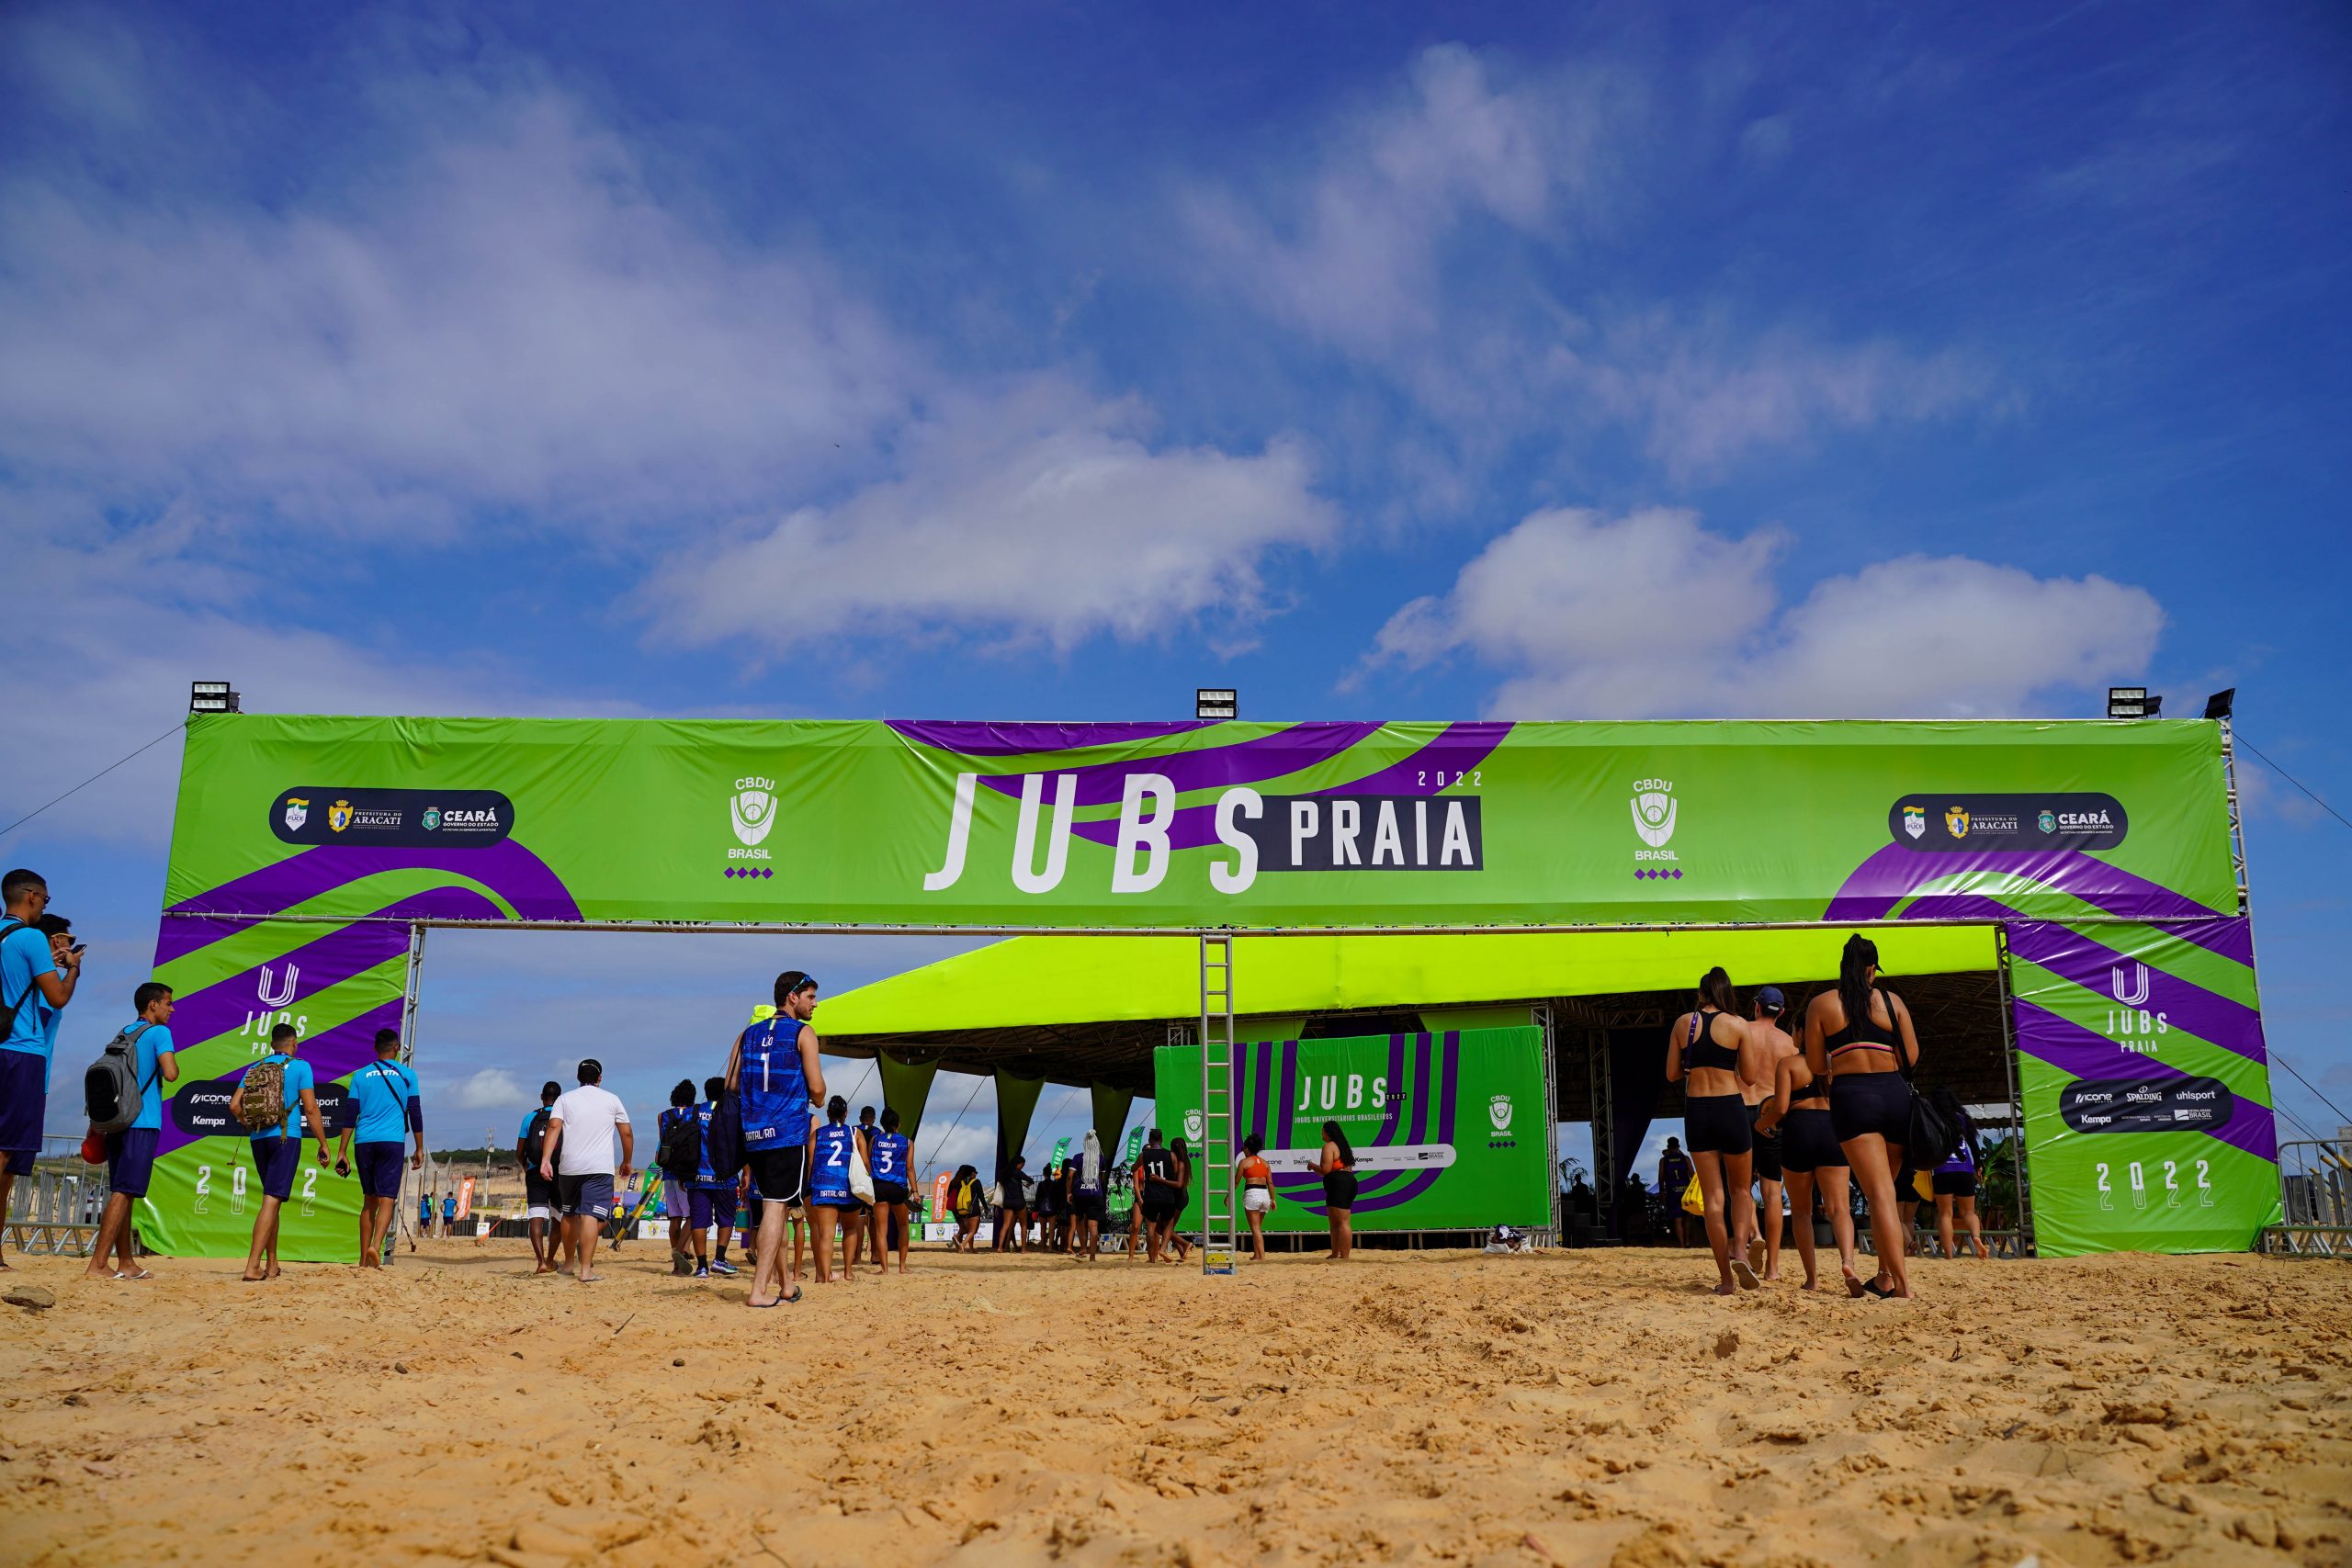 Cerimônia de abertura dos JUBs Praia 2022